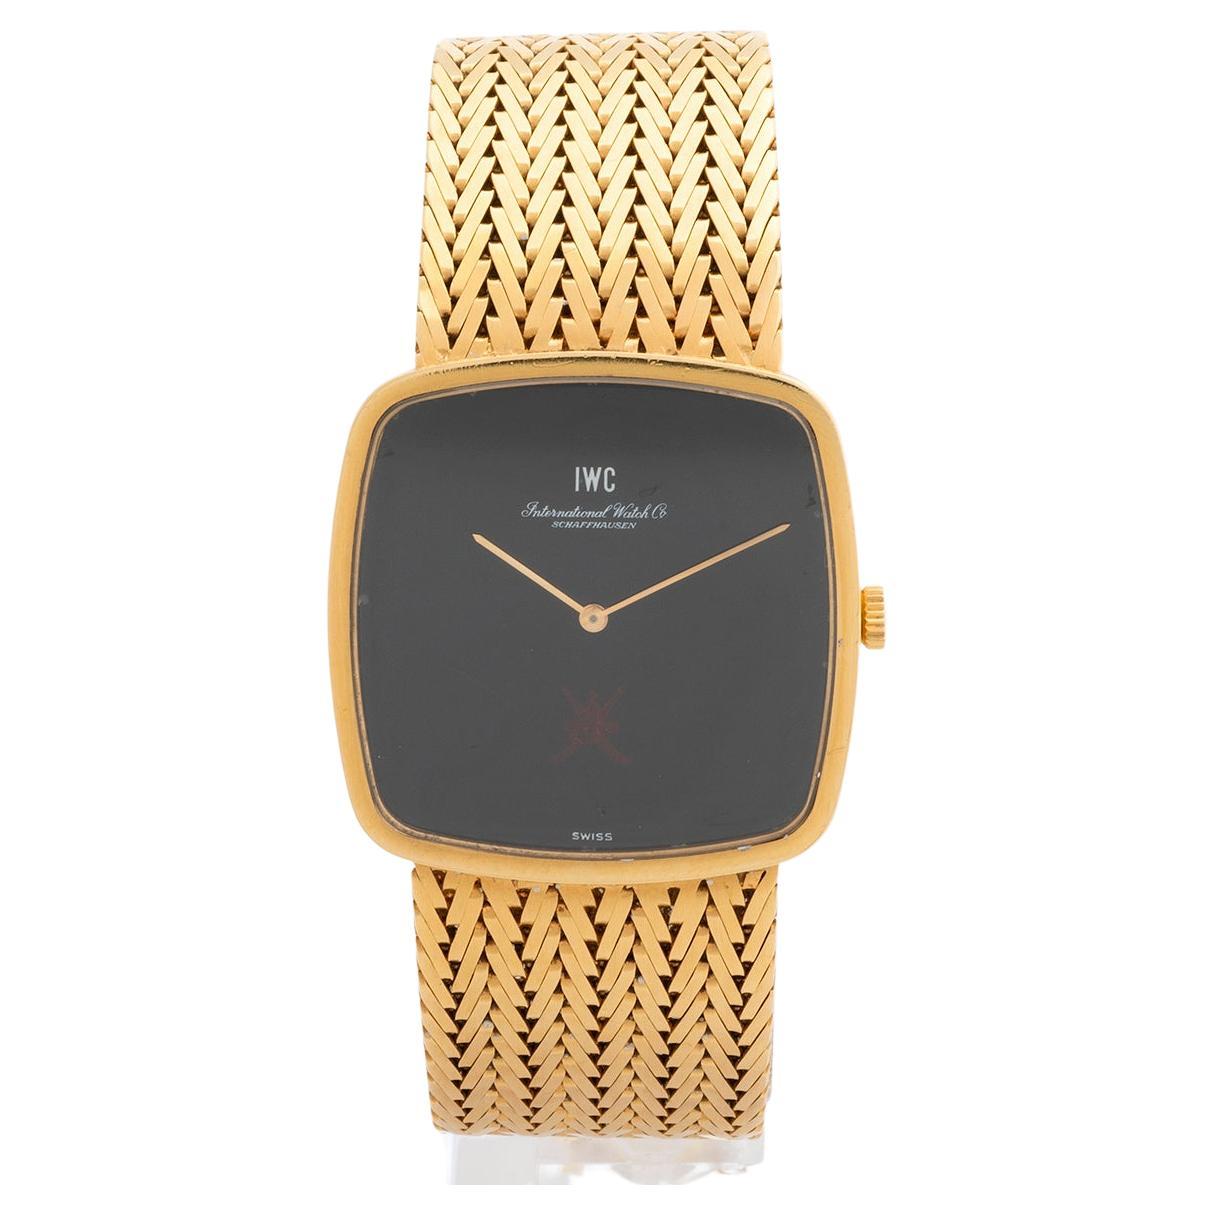 IWC Schaffhausen Oman Khanjar Wristwatch. Yellow Gold, Onyx Dial, Year 1972.